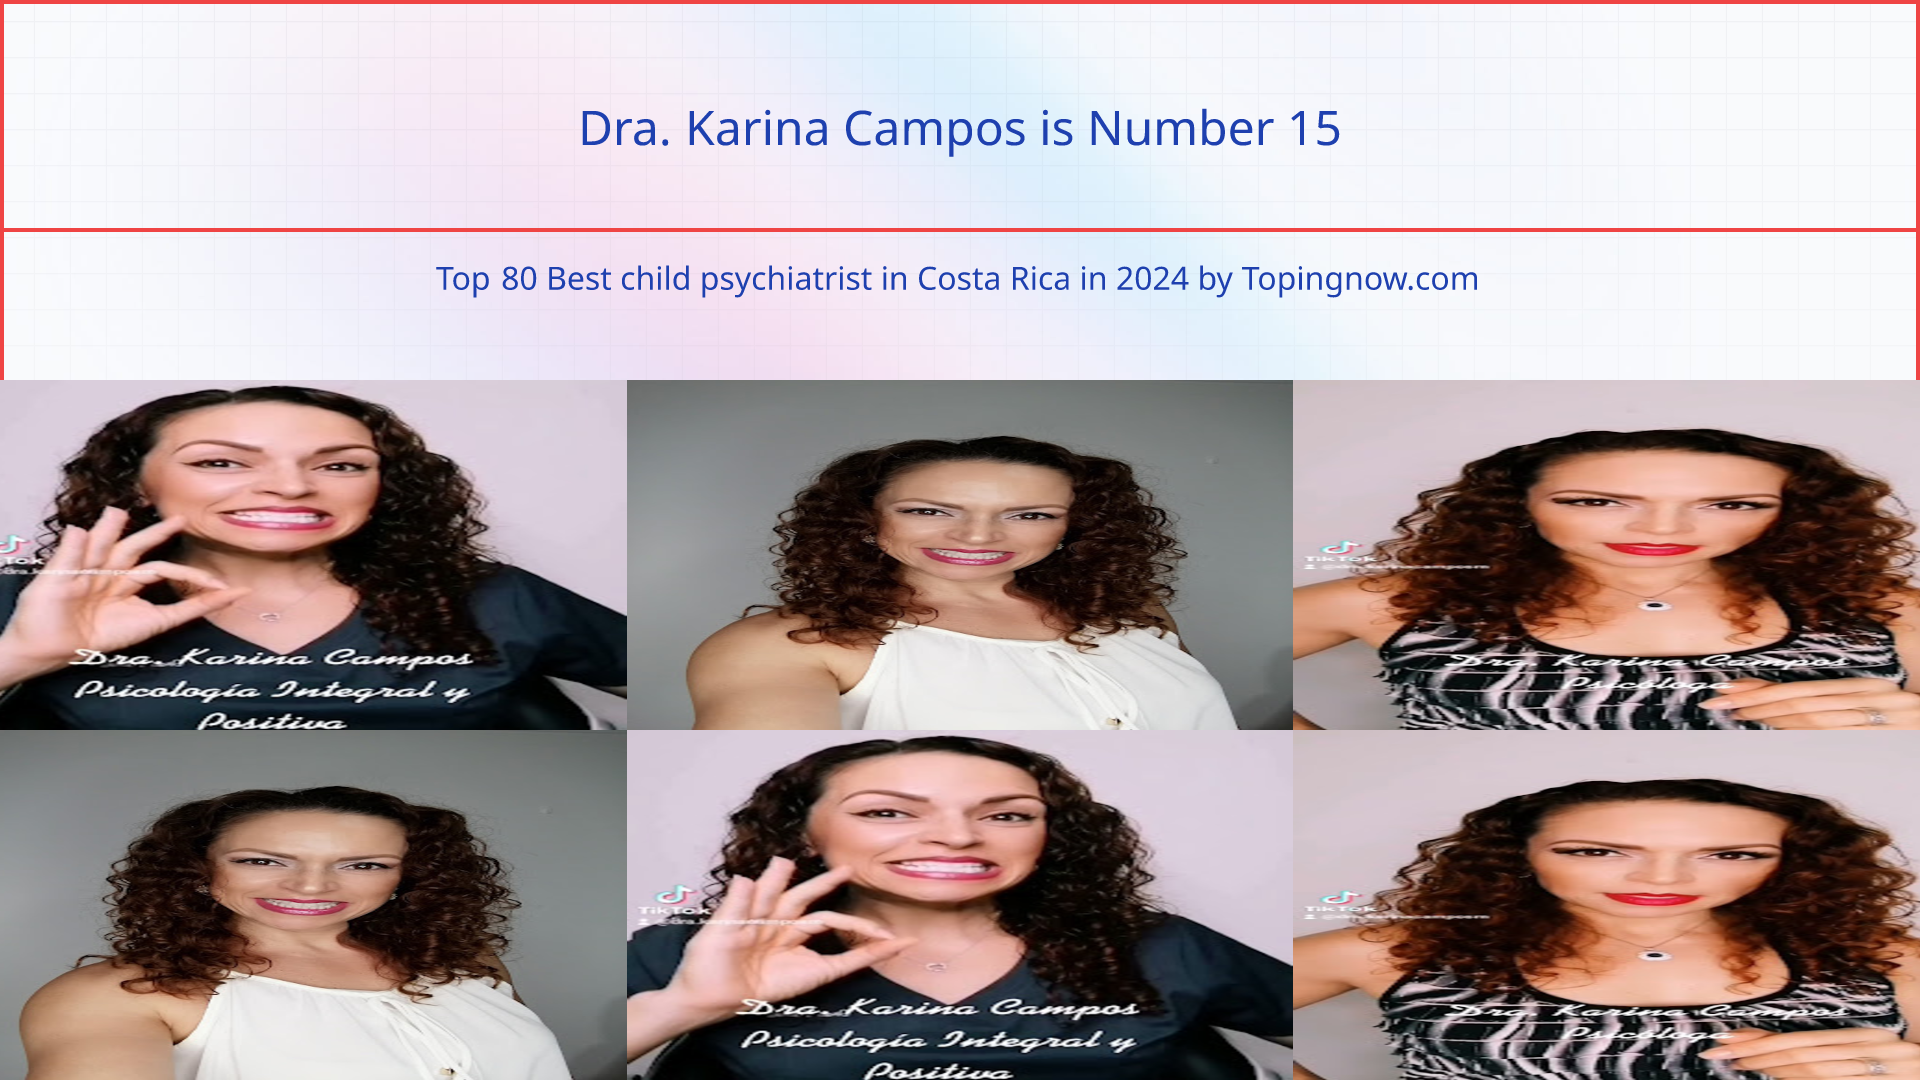 Dra. Karina Campos: Top 80 Best child psychiatrist in Costa Rica in 2024